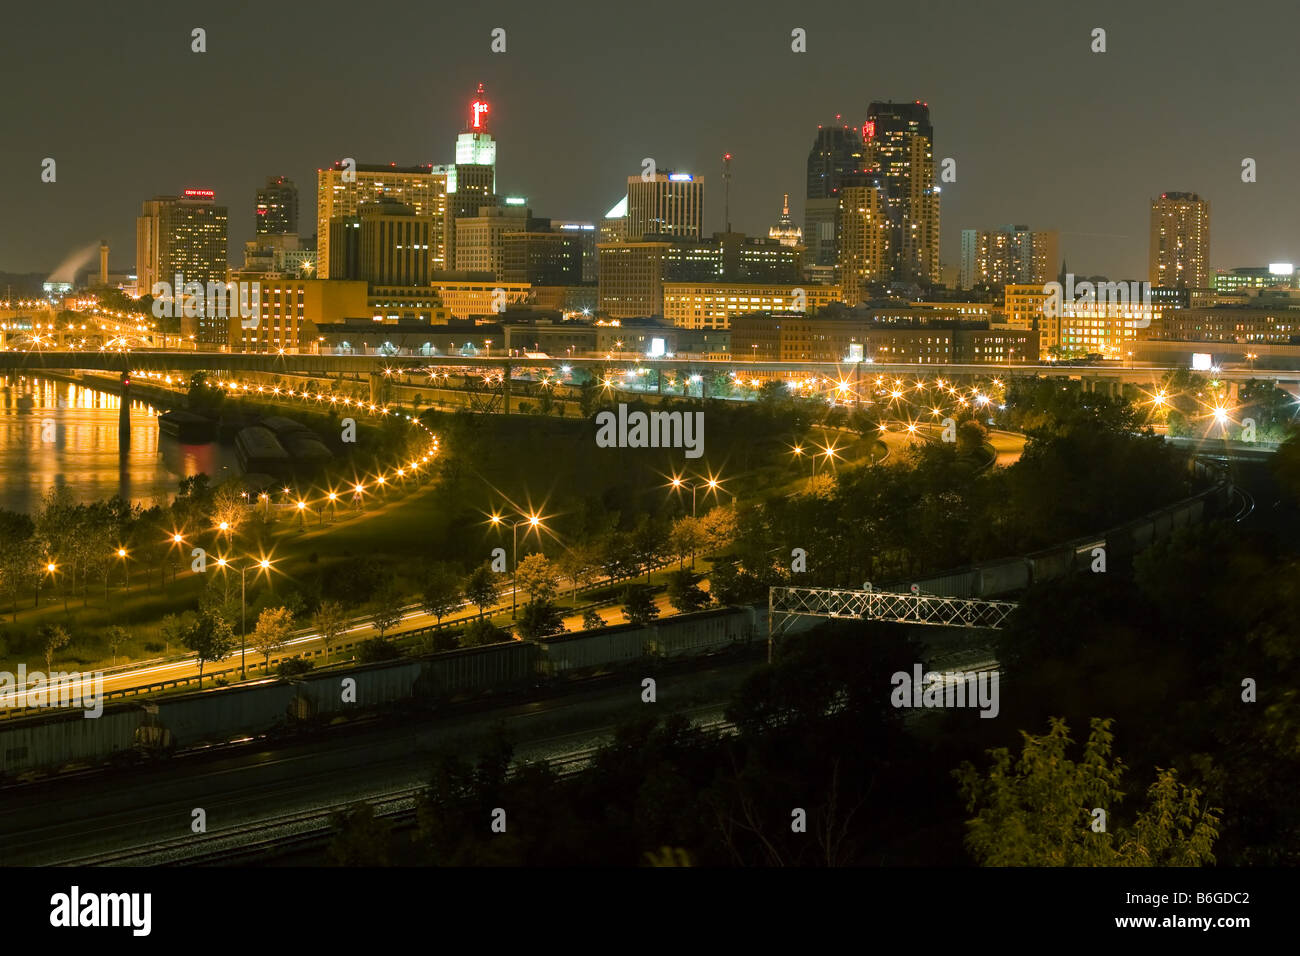 The skyline of downtown St. Paul, MN seen from the Dayton's Bluff neighborhood. Stock Photo